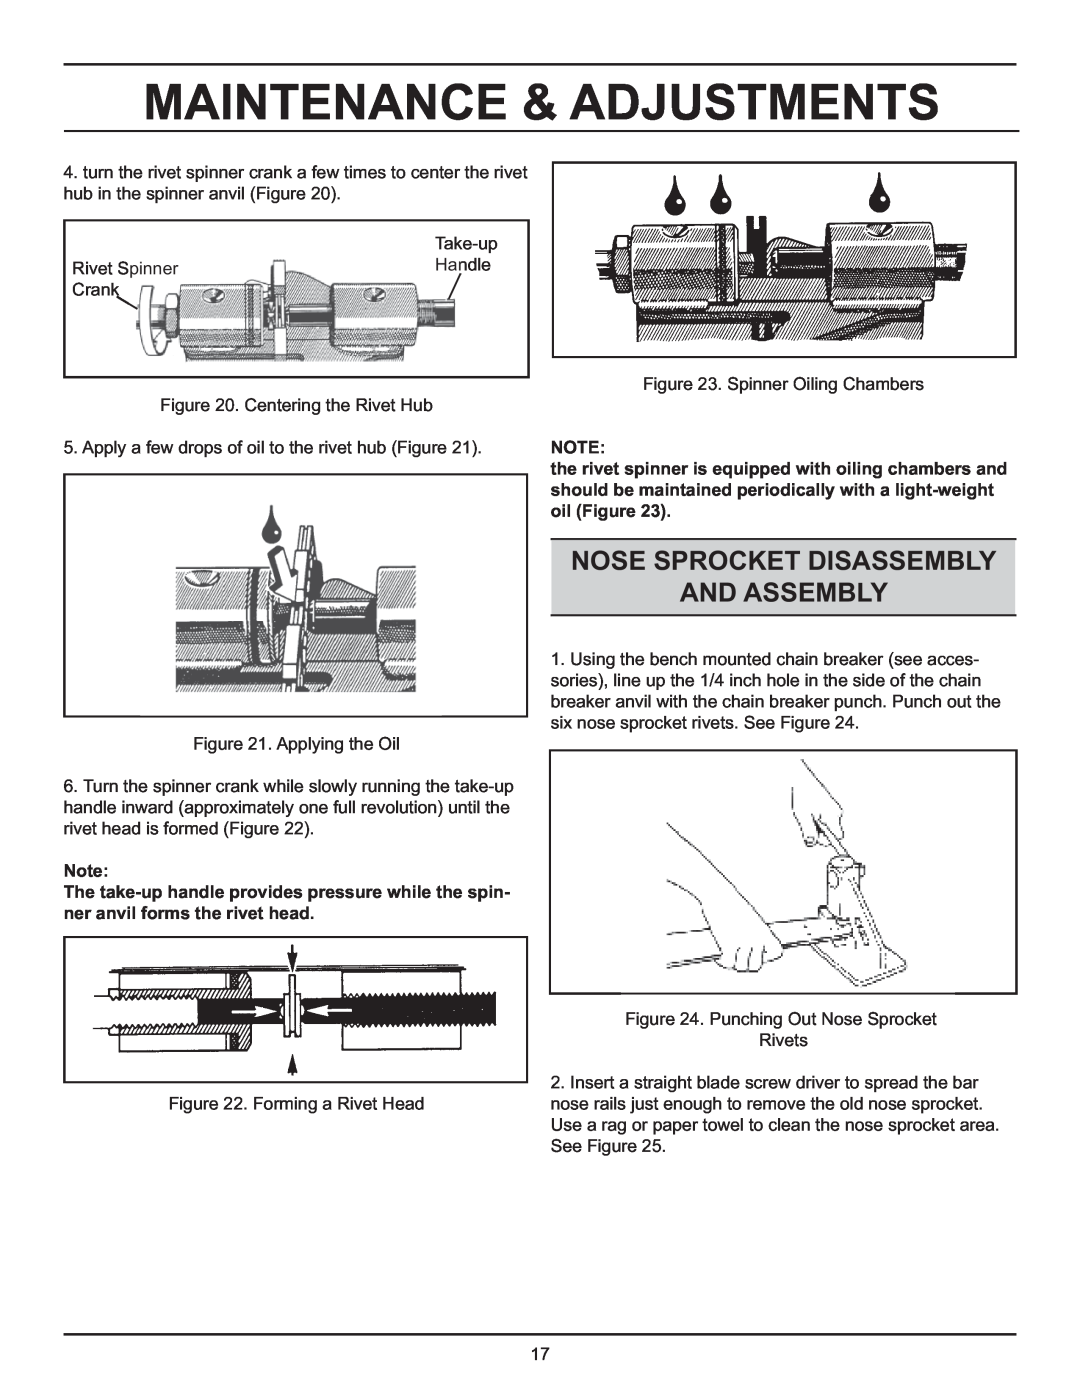 Stanley Black & Decker DS06 manual Nose Sprocket Disassembly And Assembly, Maintenance & Adjustments 